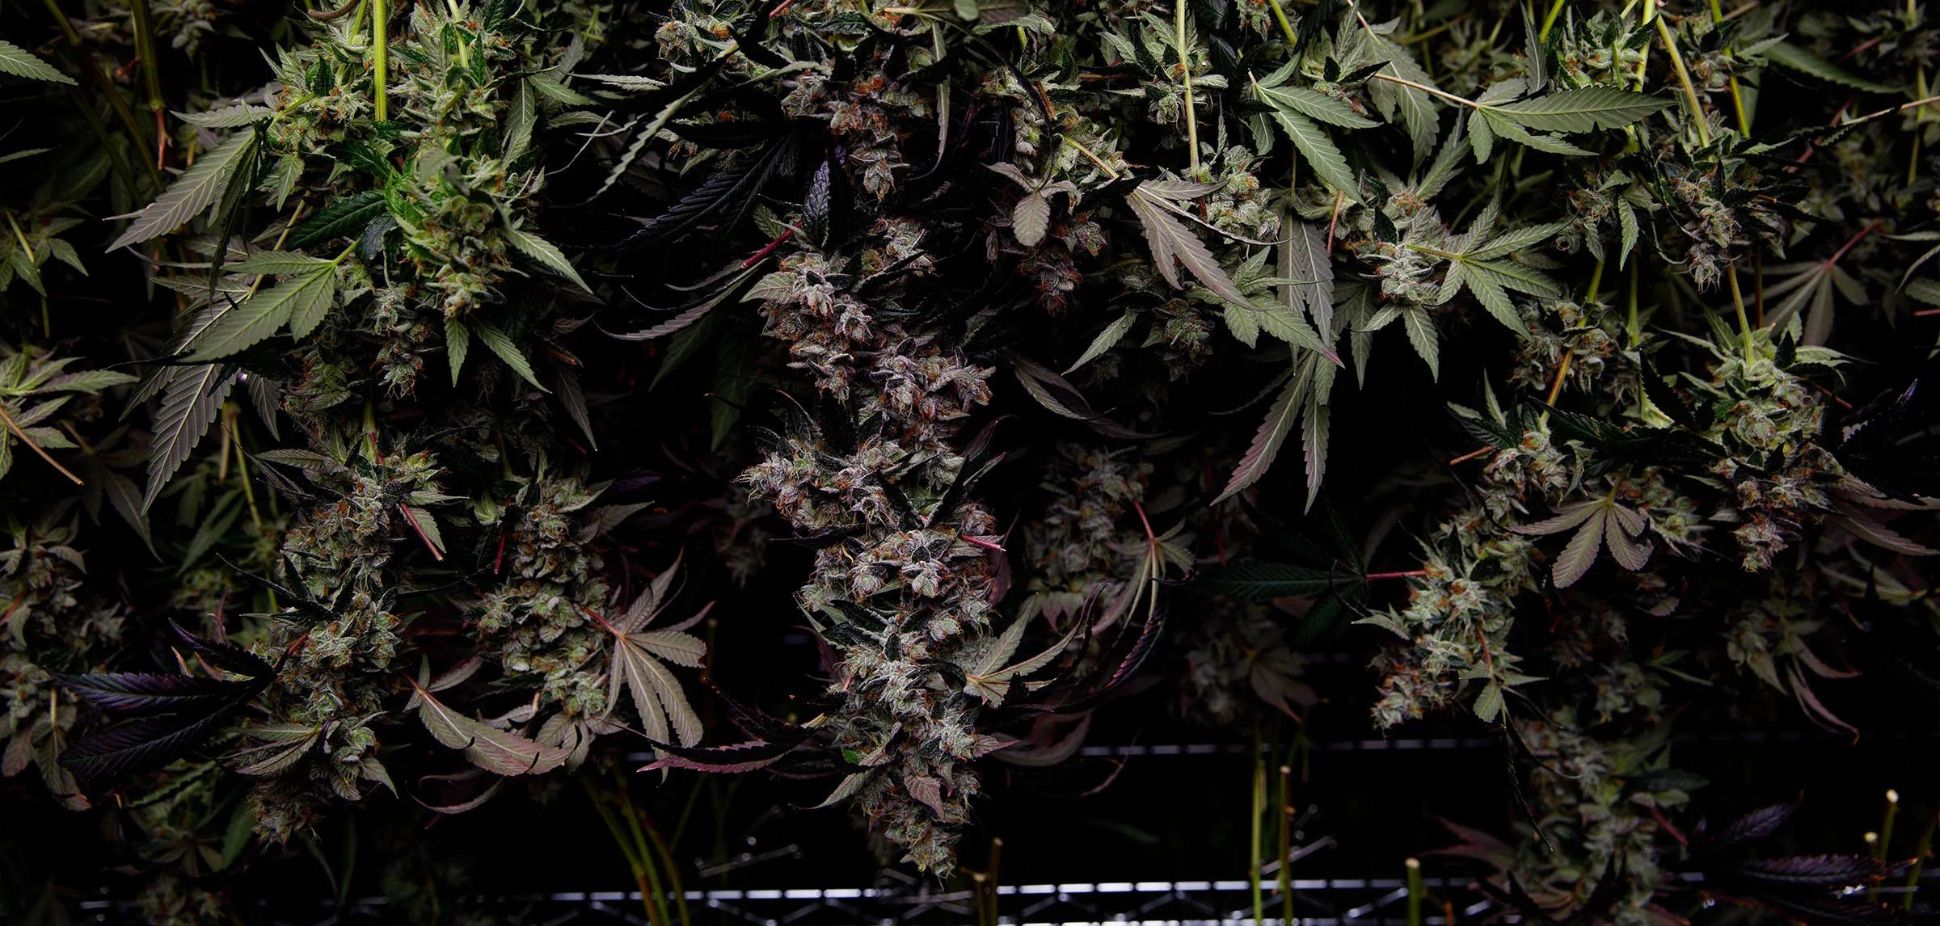 Coast Mountain: The Organic Choice For Craft Cannabis